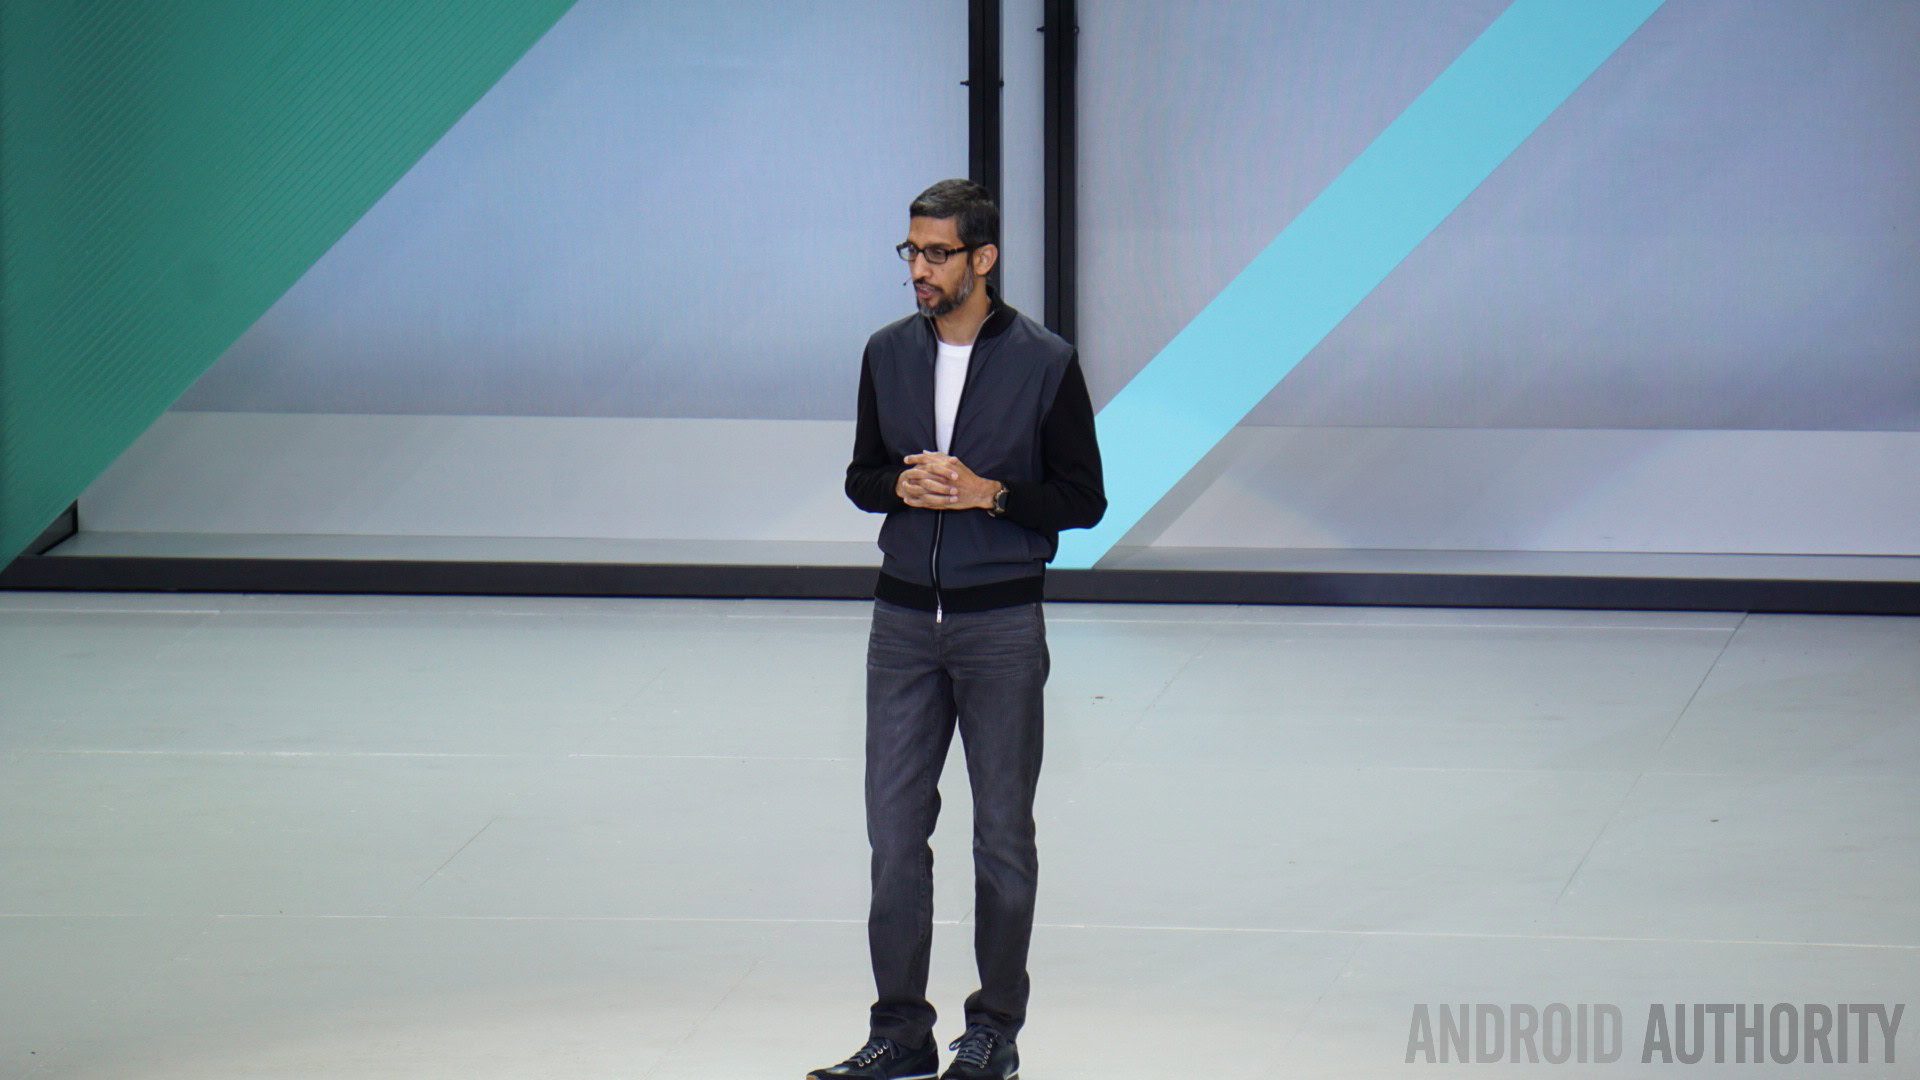 Google CEO Sundar Pichai on stage at Google IO